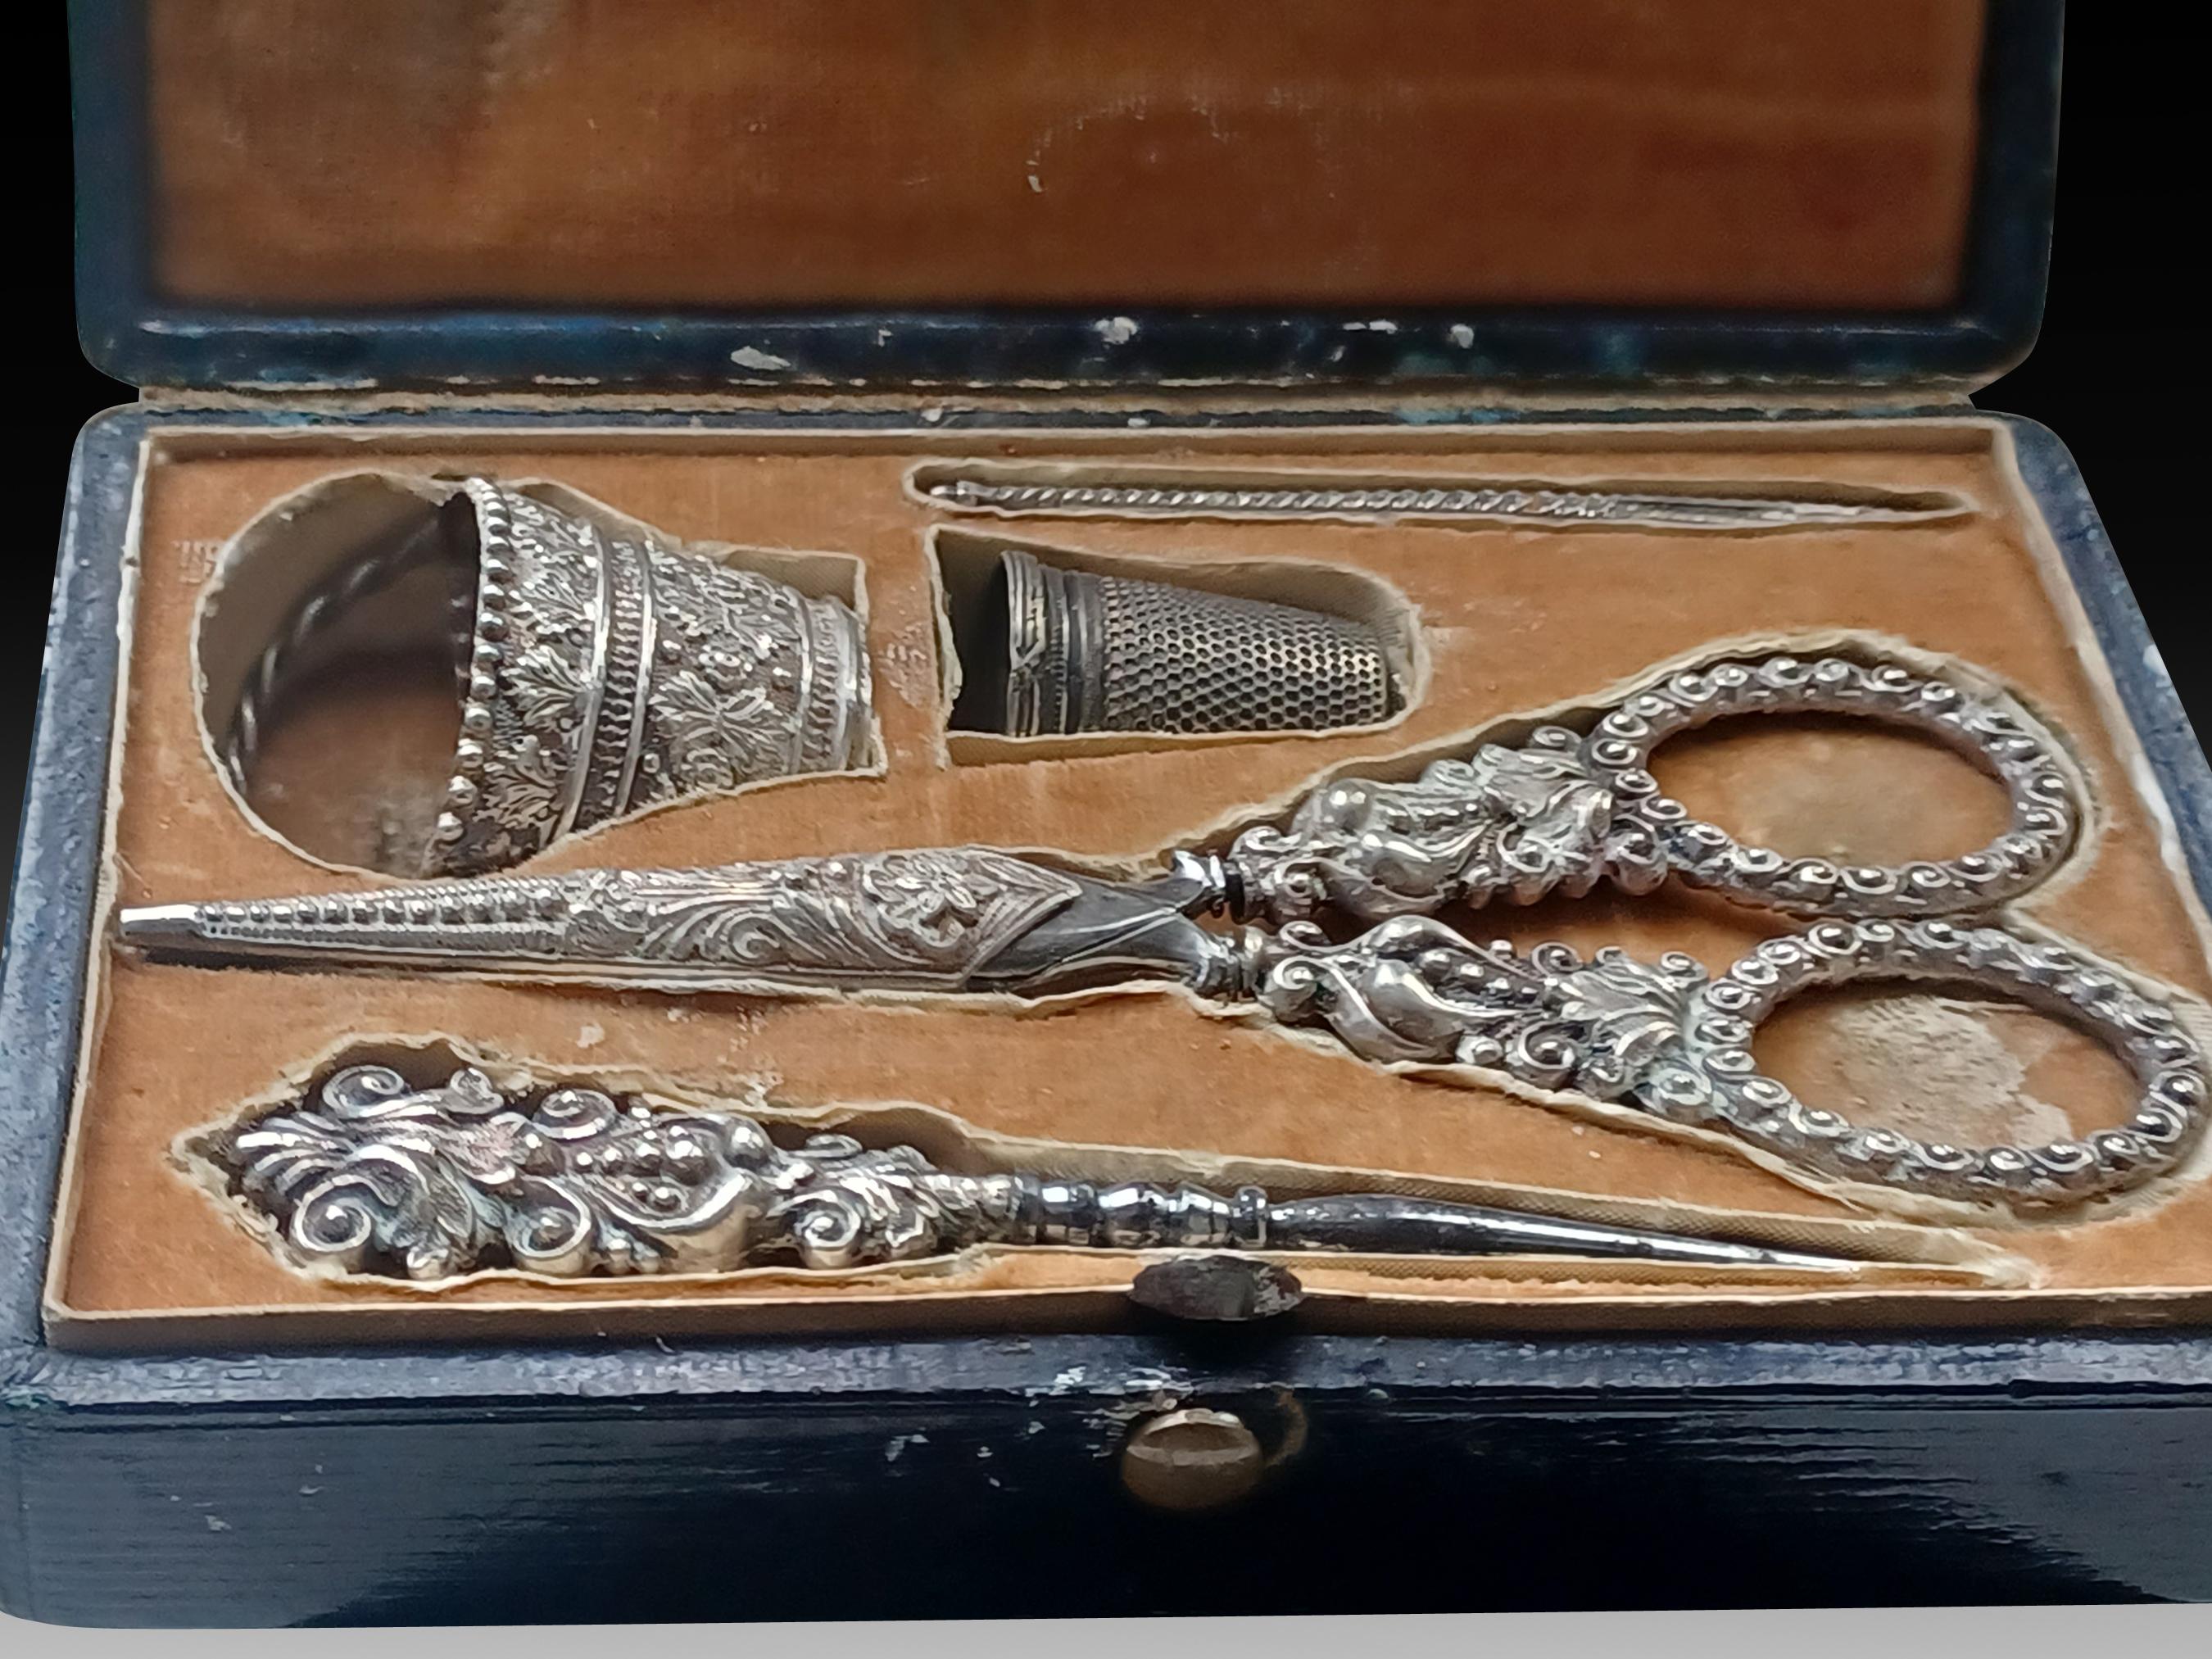 Rare Antique George IV Lady’s Sewing Necessaire with Original Case, est. 1825 For Sale 10